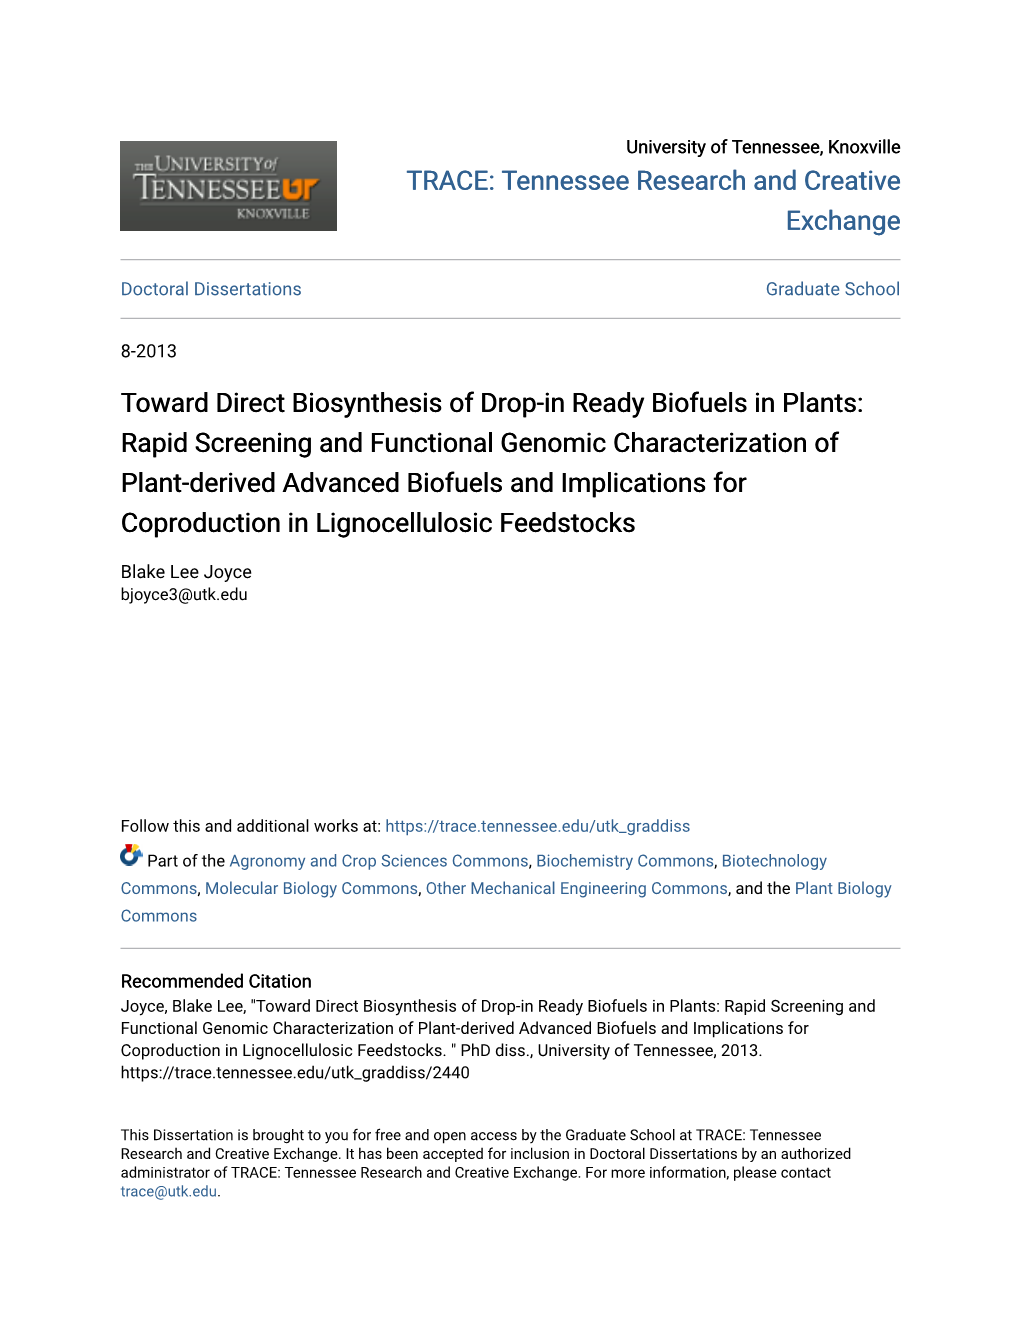 Toward Direct Biosynthesis of Drop-In Ready Biofuels in Plants: Rapid